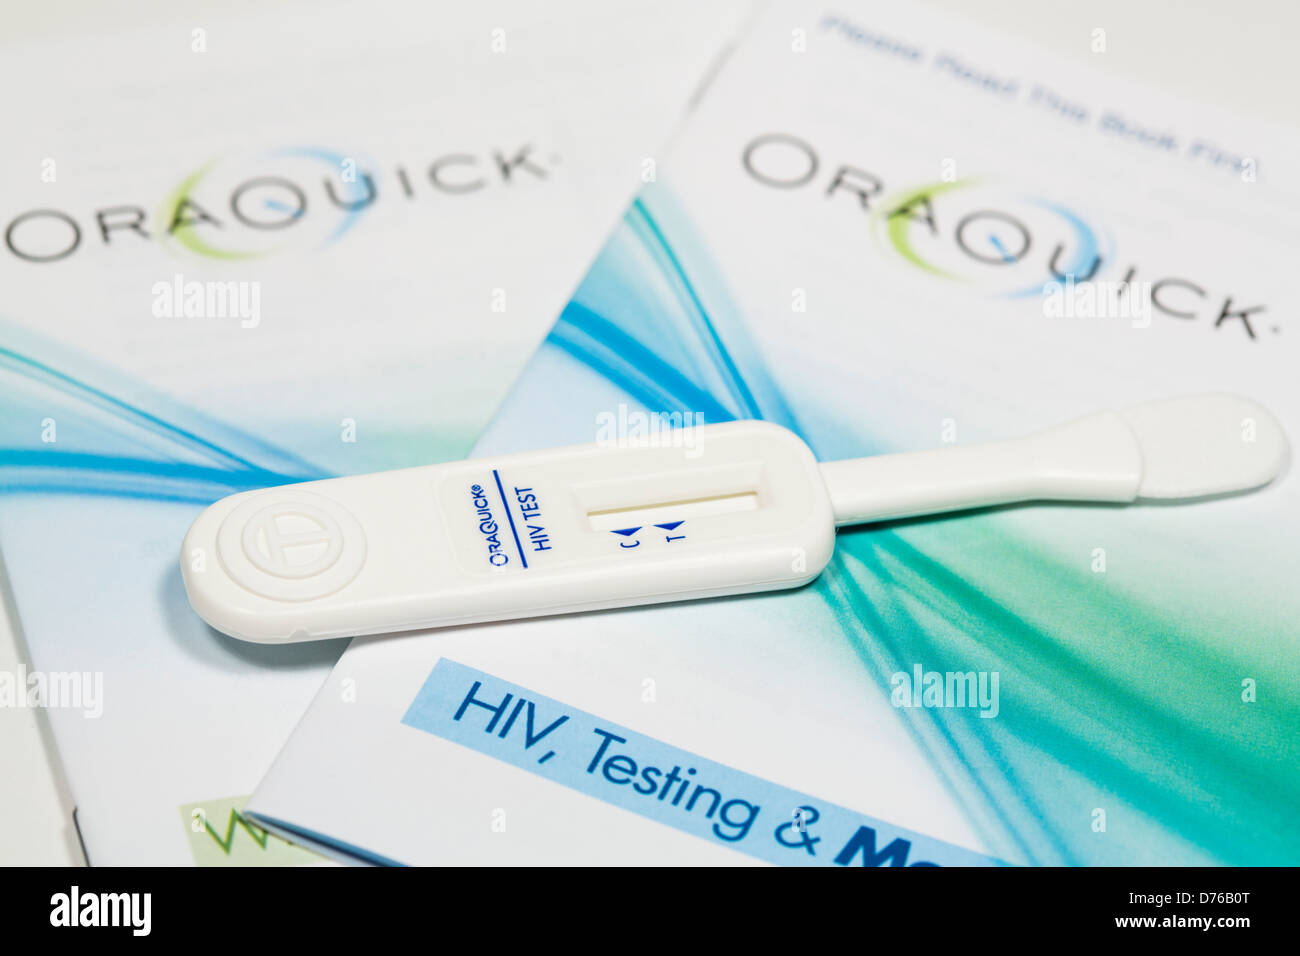 ORAQUICK HIV SELF-TEST.